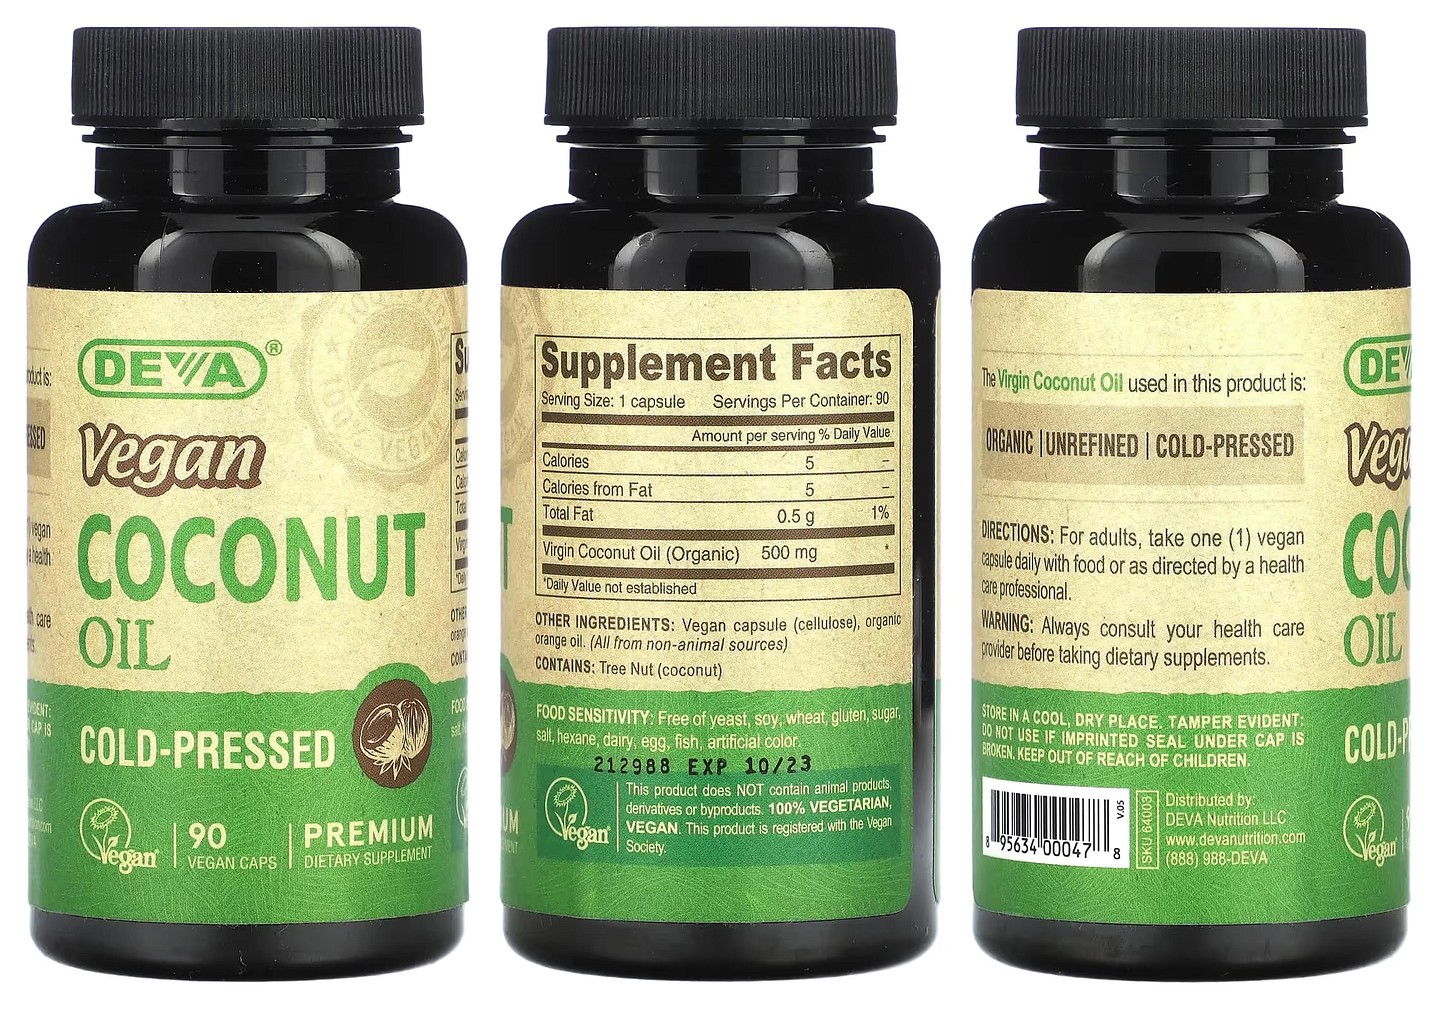 Deva, Vegan Coconut Oil packaging